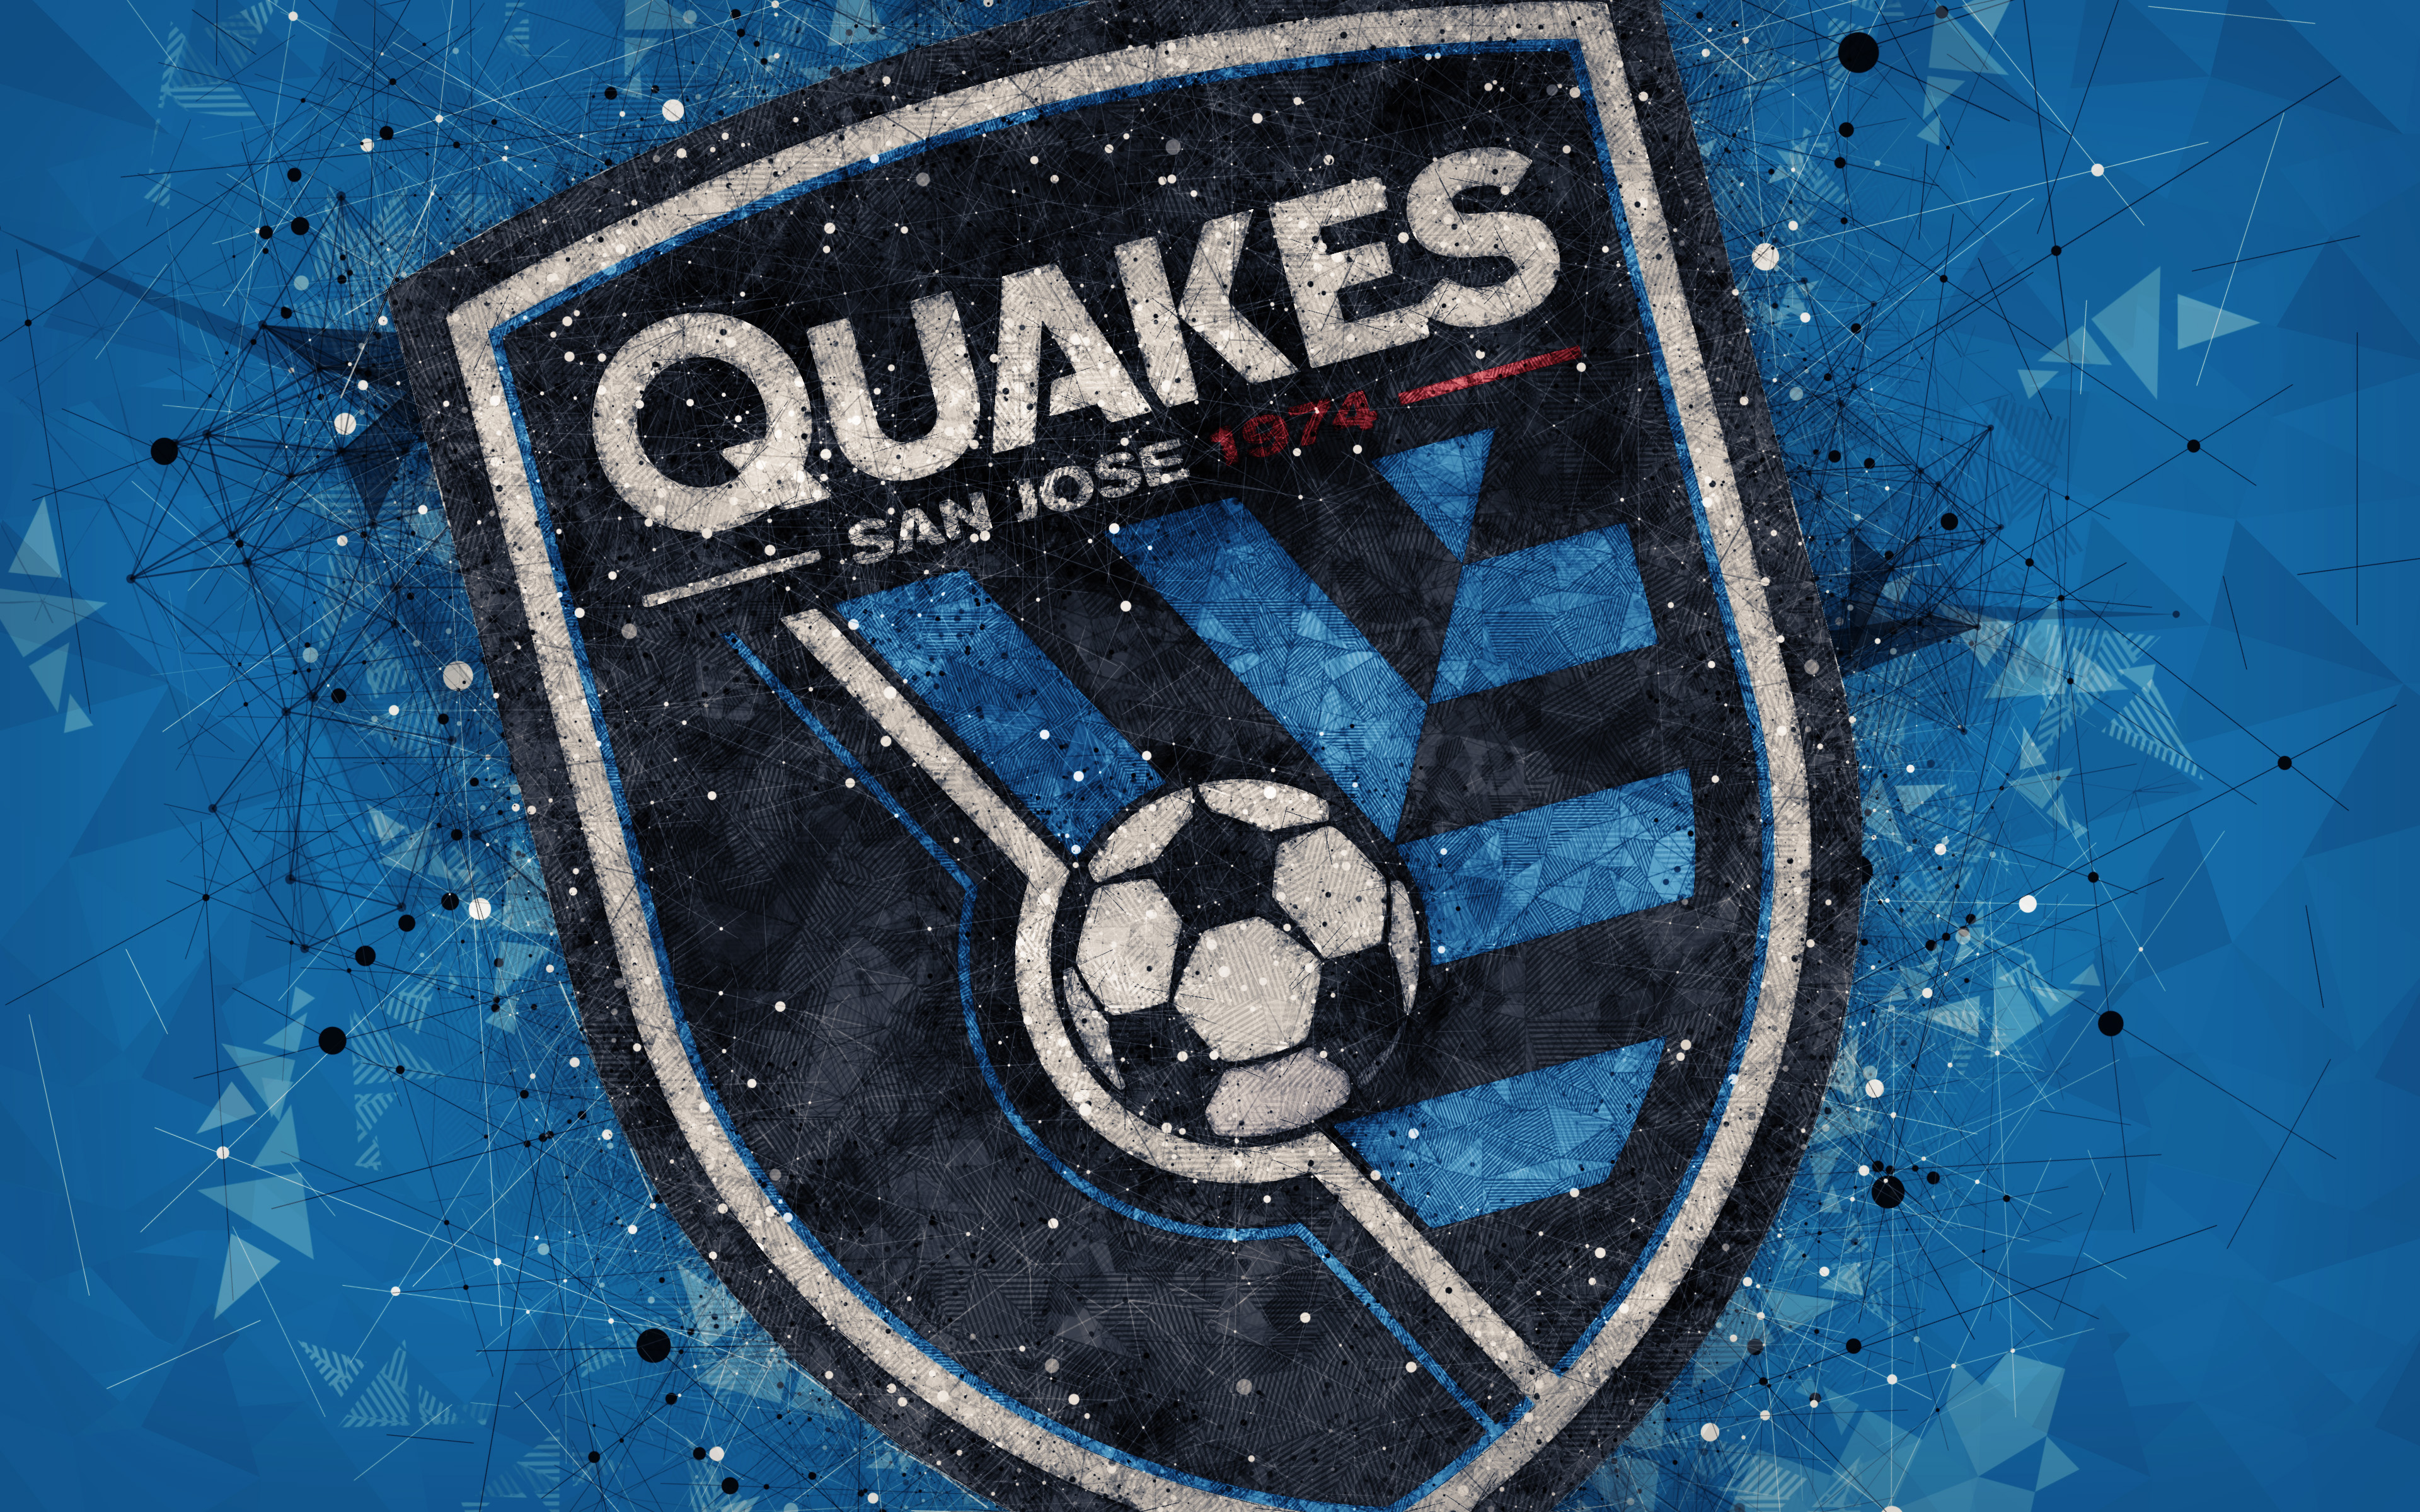 Sports San Jose Earthquakes HD Wallpaper | Background Image